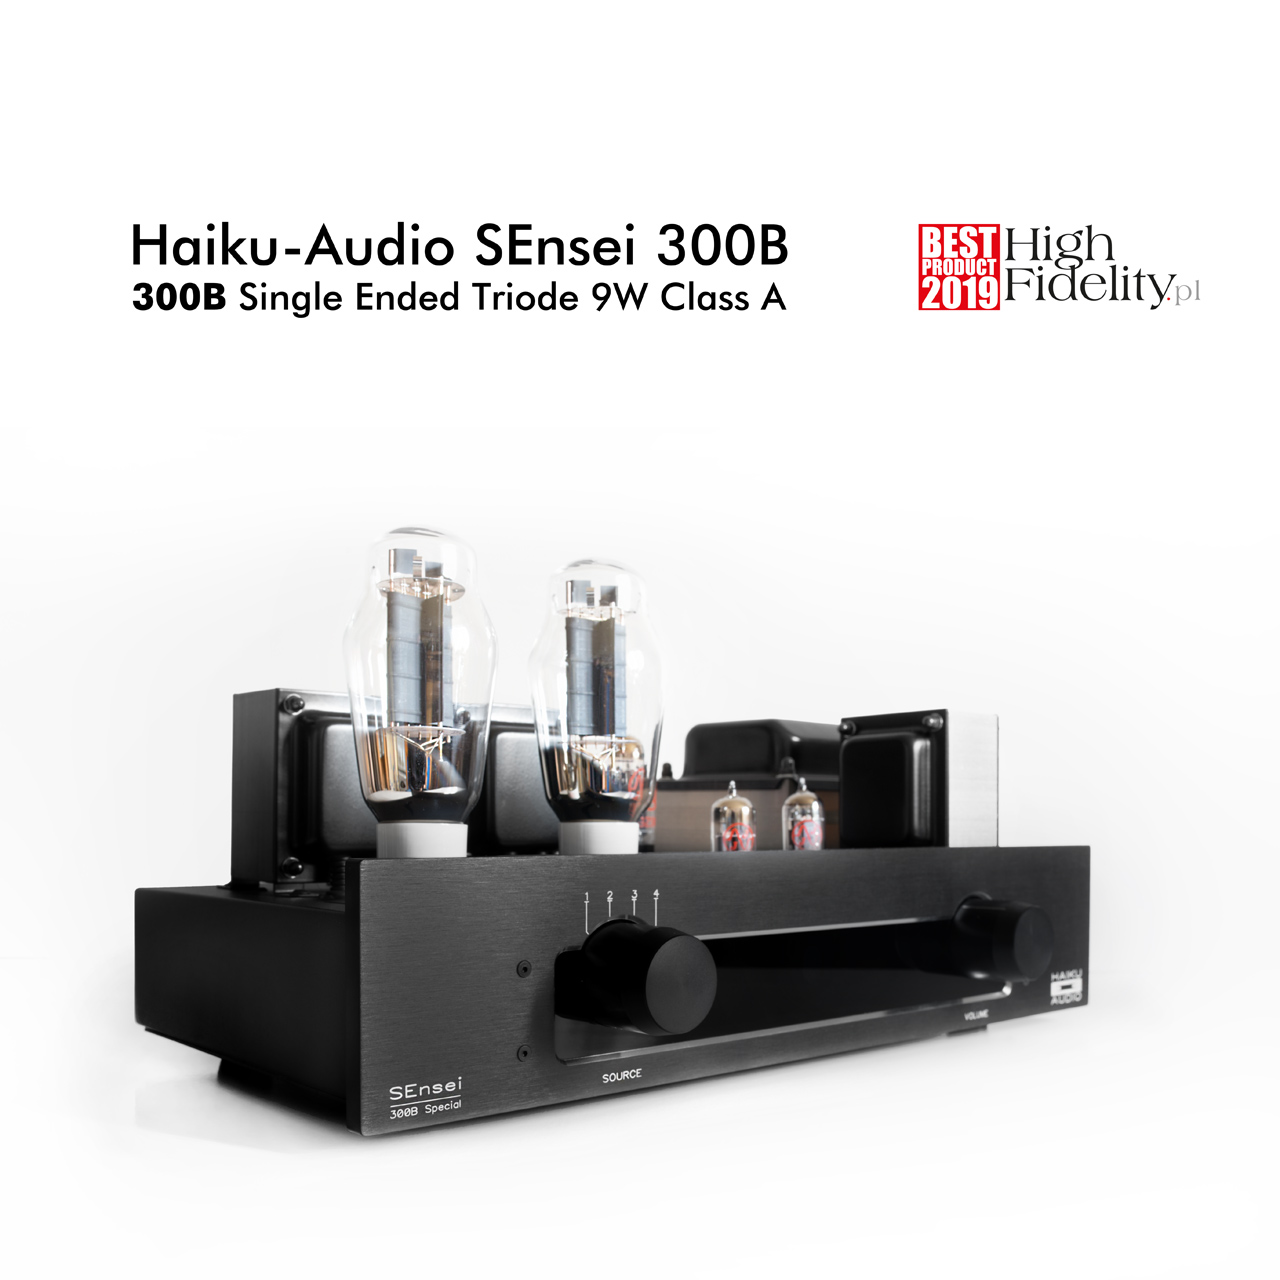 Haiku-Audio SEnsei 300B